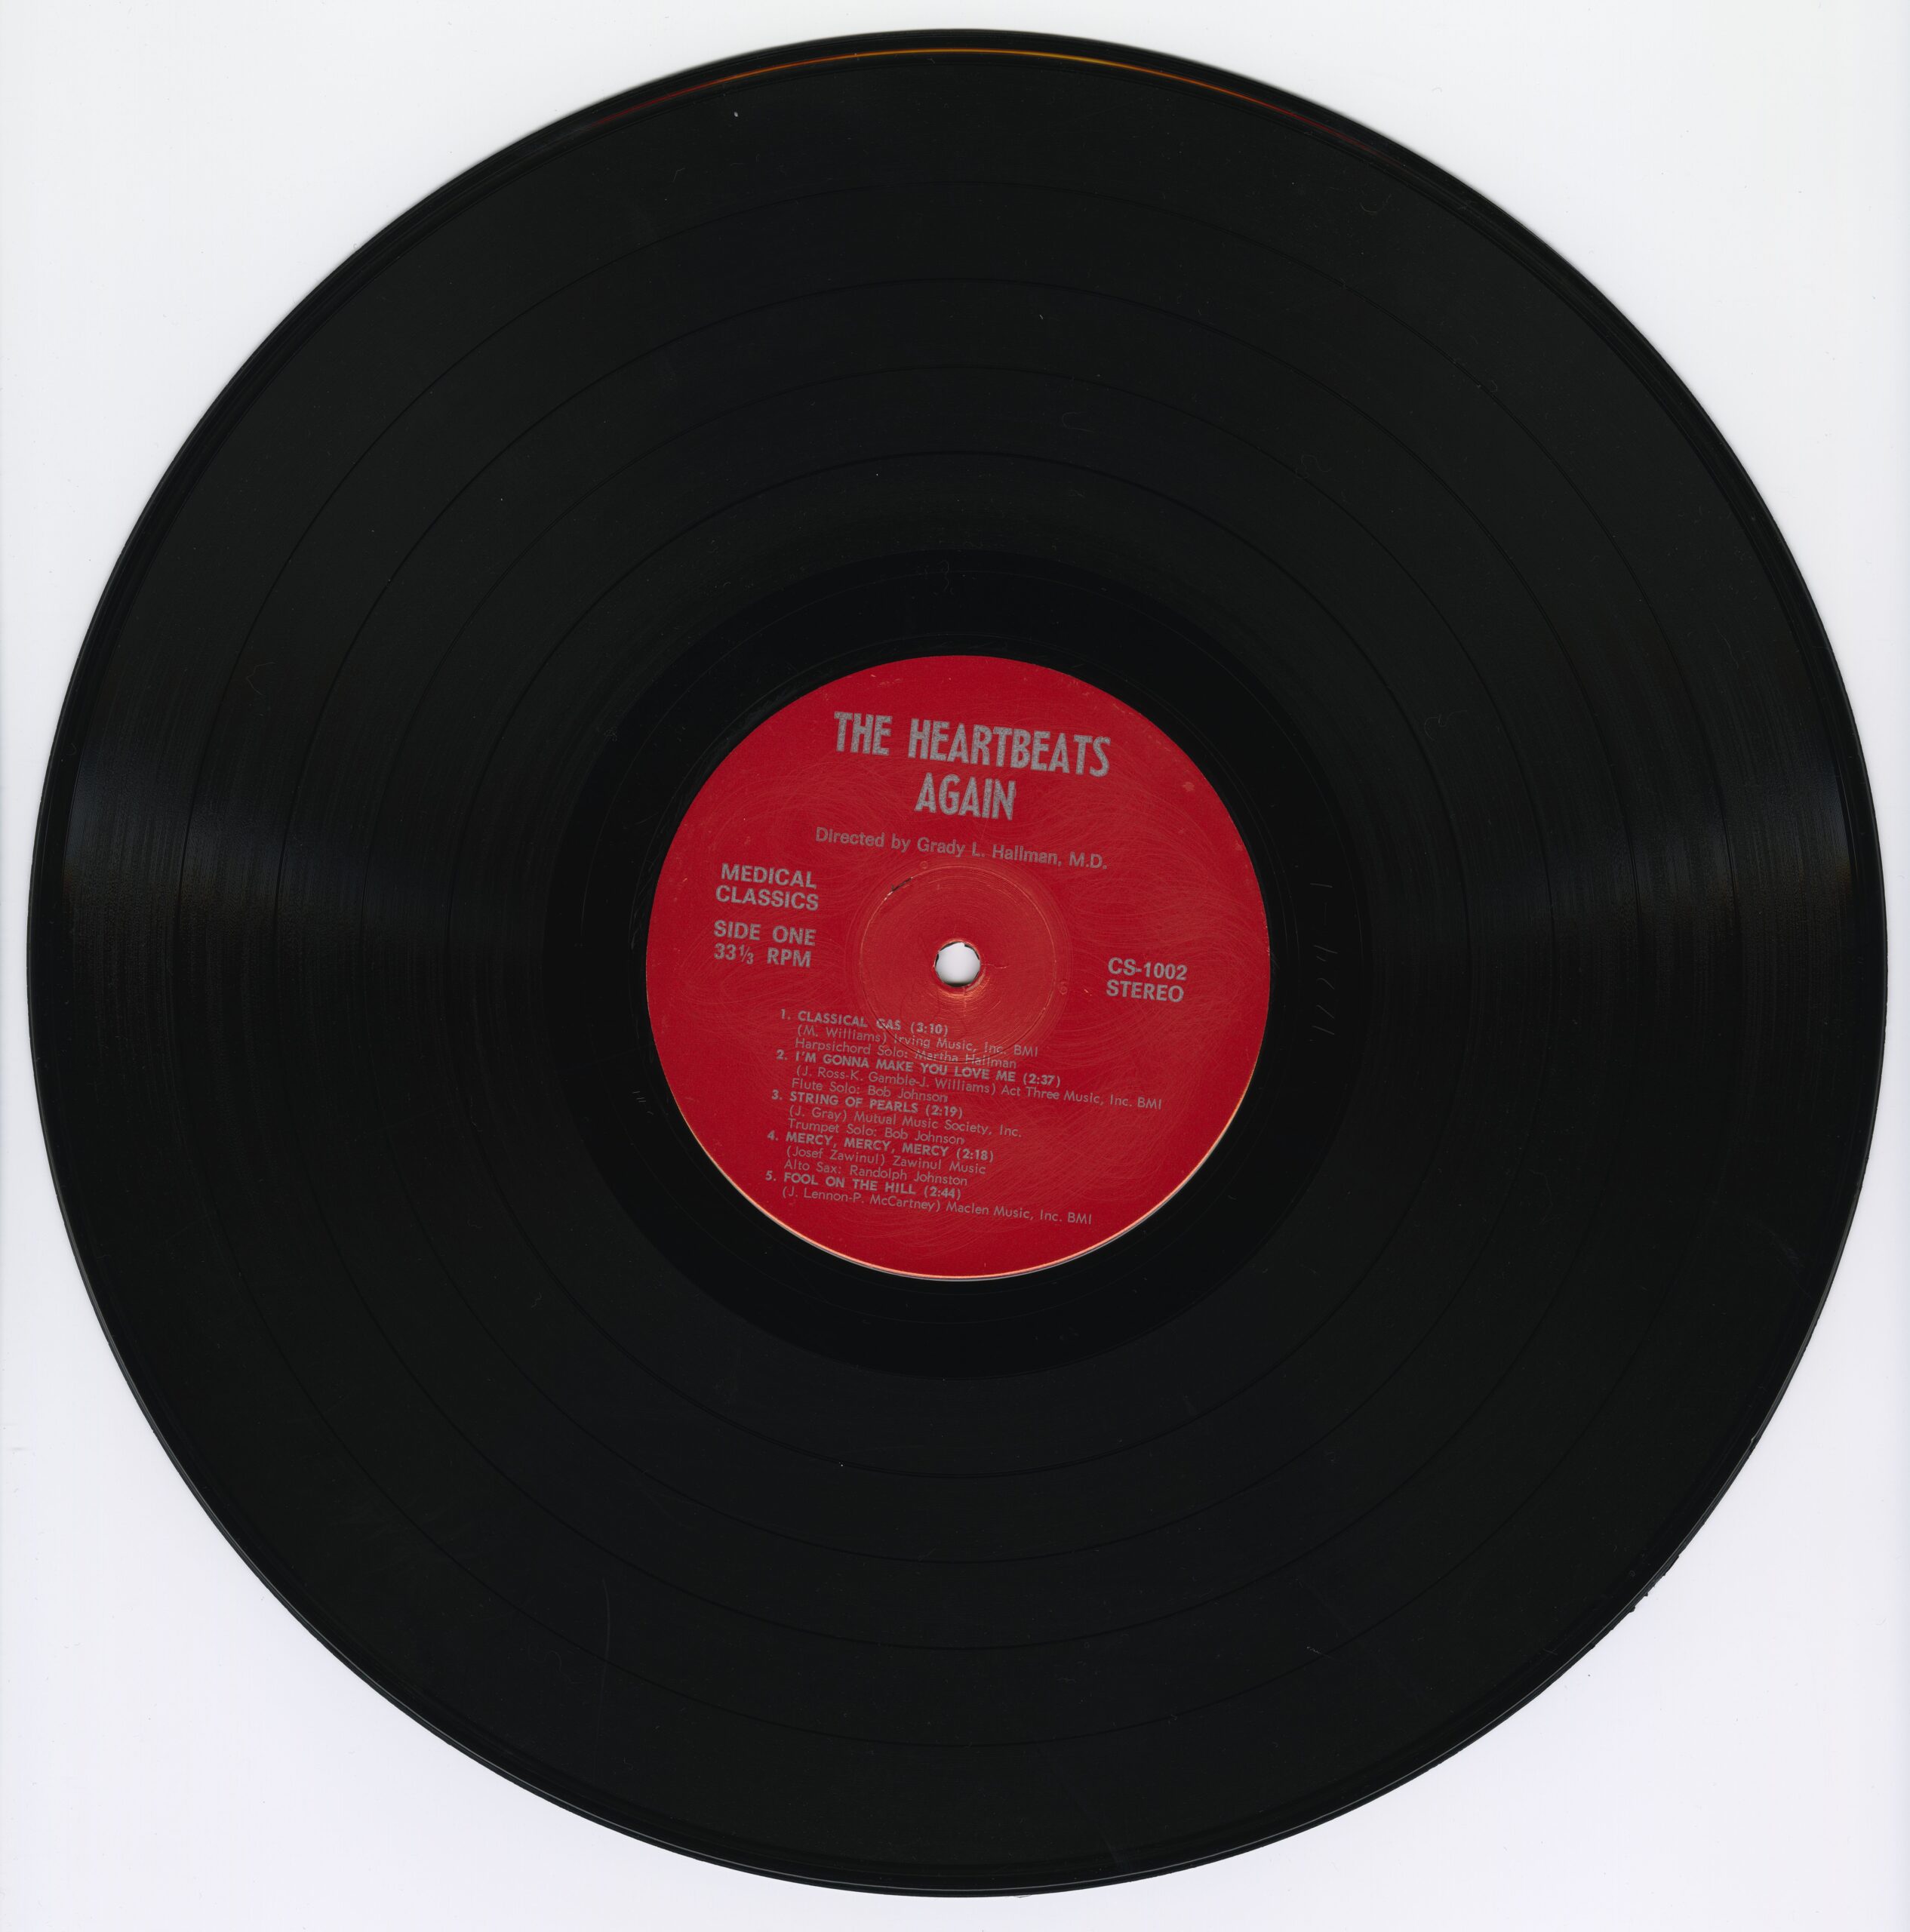 Newly Digitized: Vinyls!